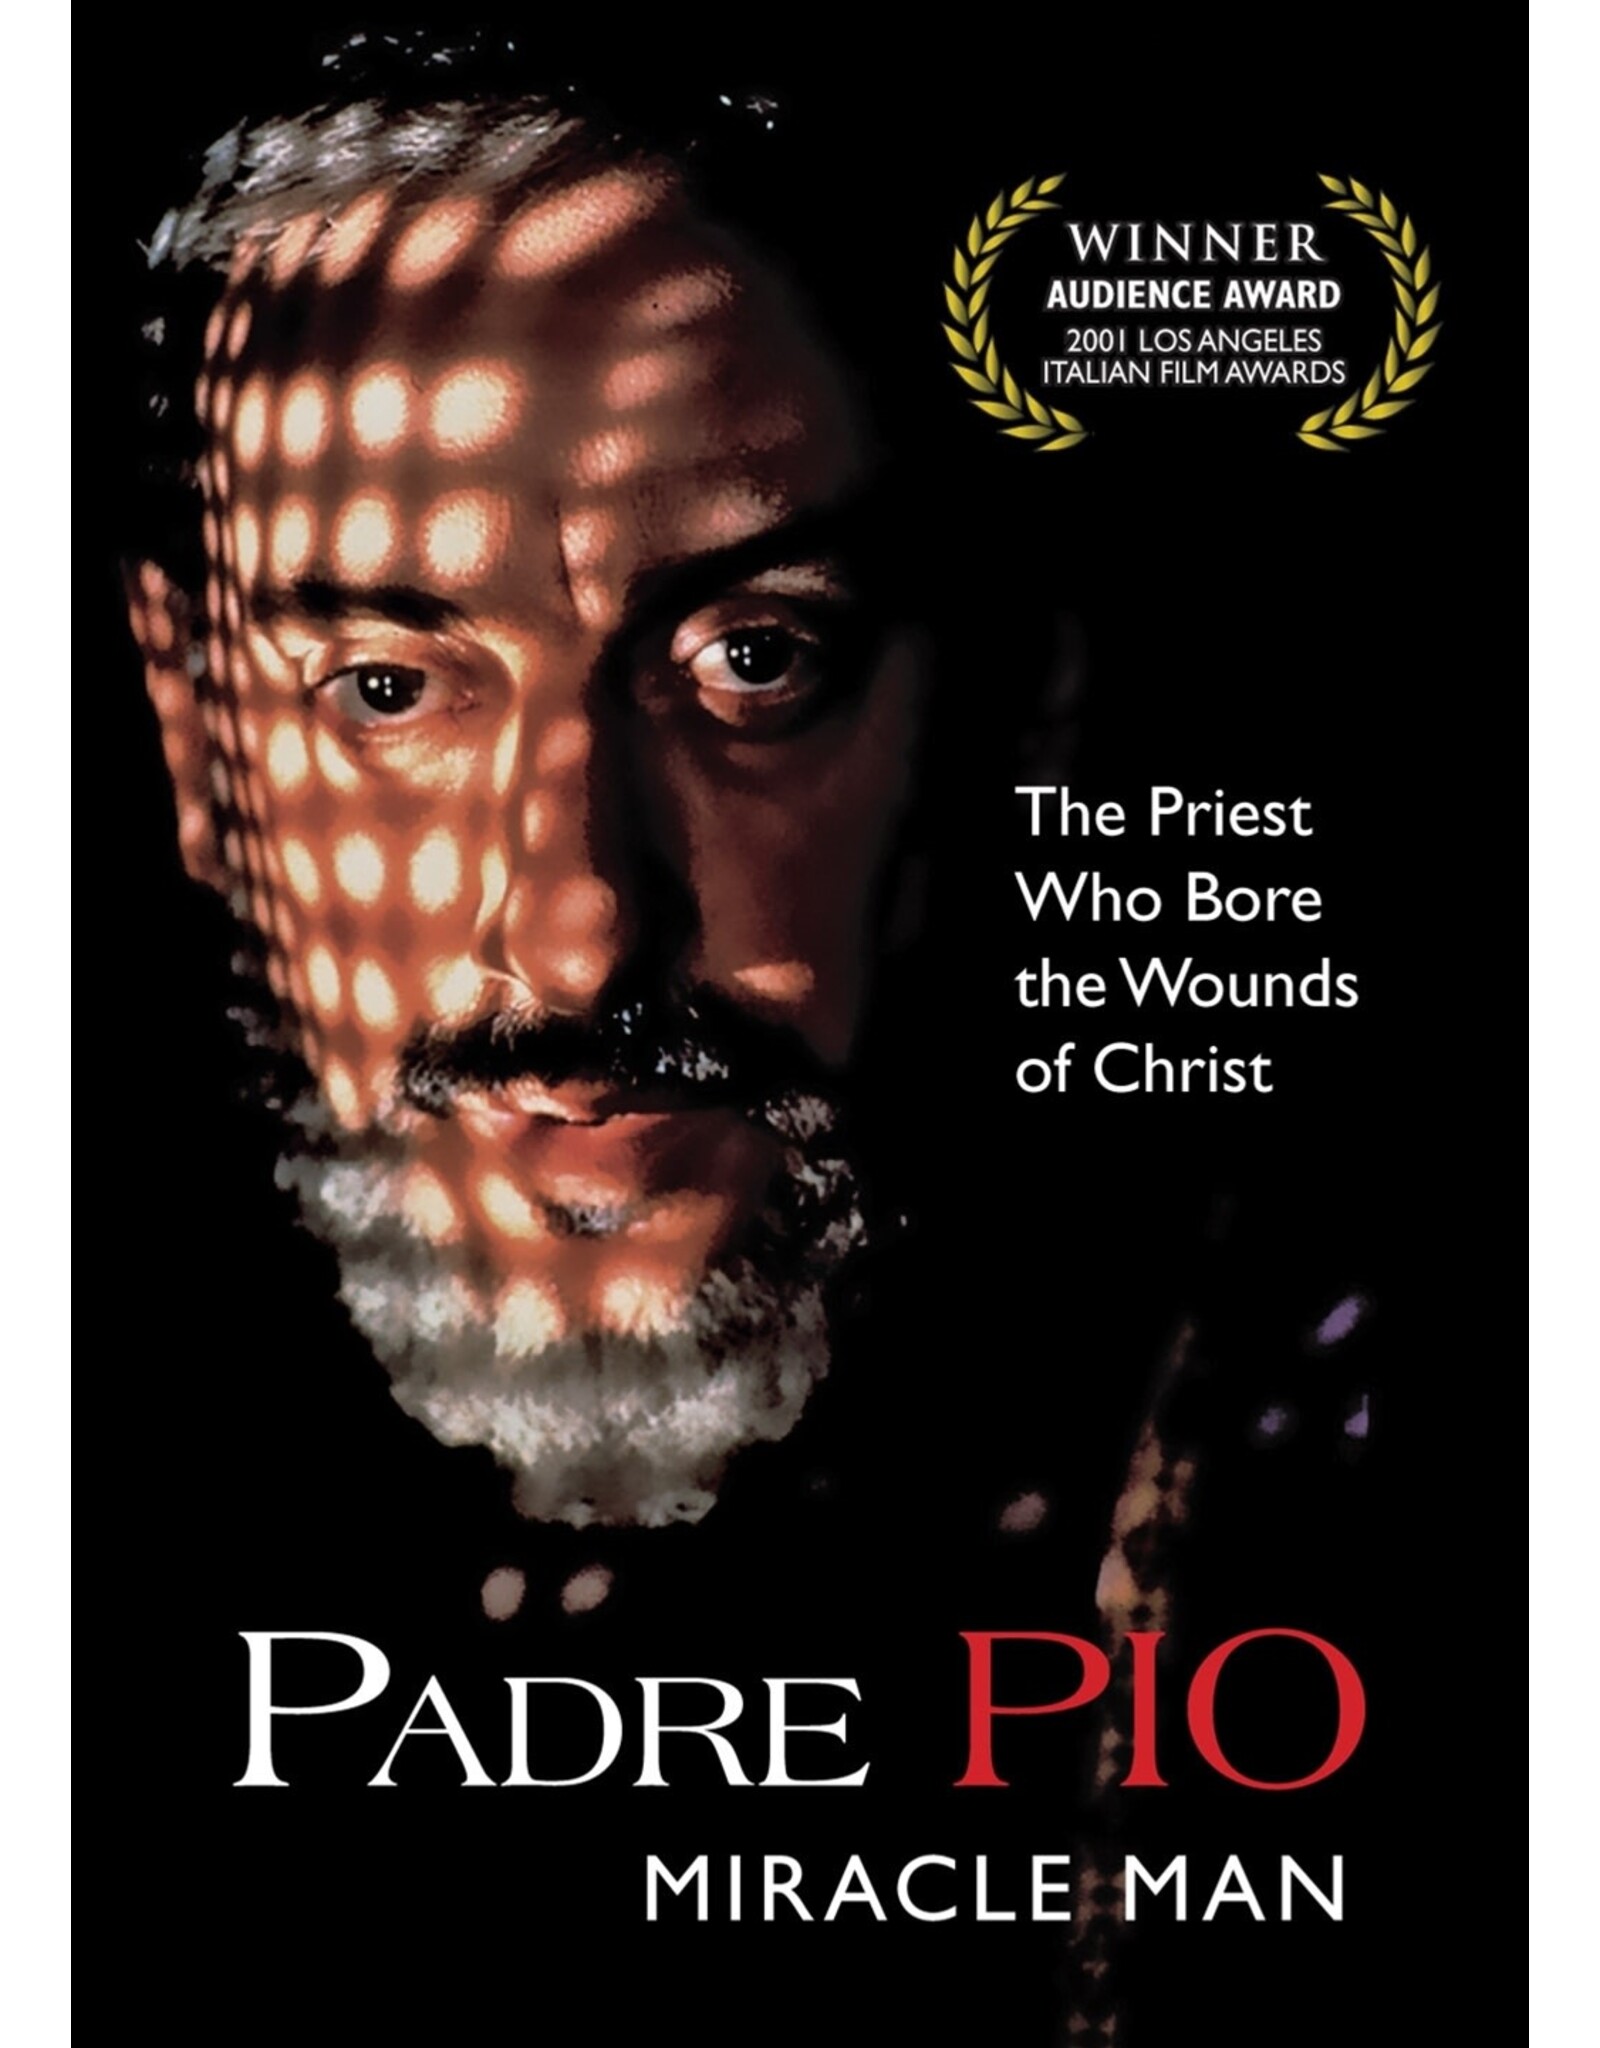 Ignatius Press Padre Pio, Miracle Man DVD